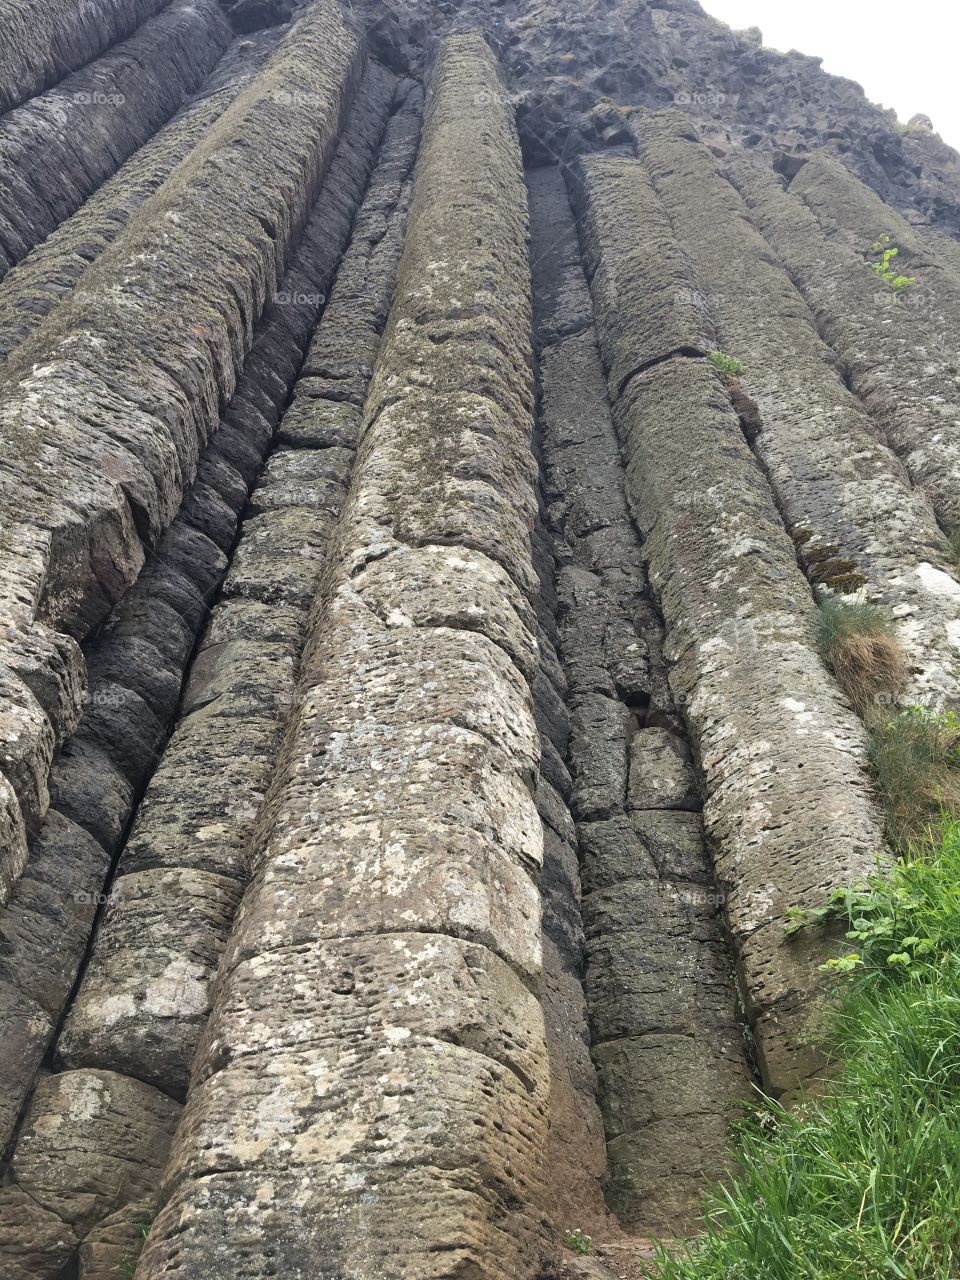 Basalt columns at Giant's Causeway